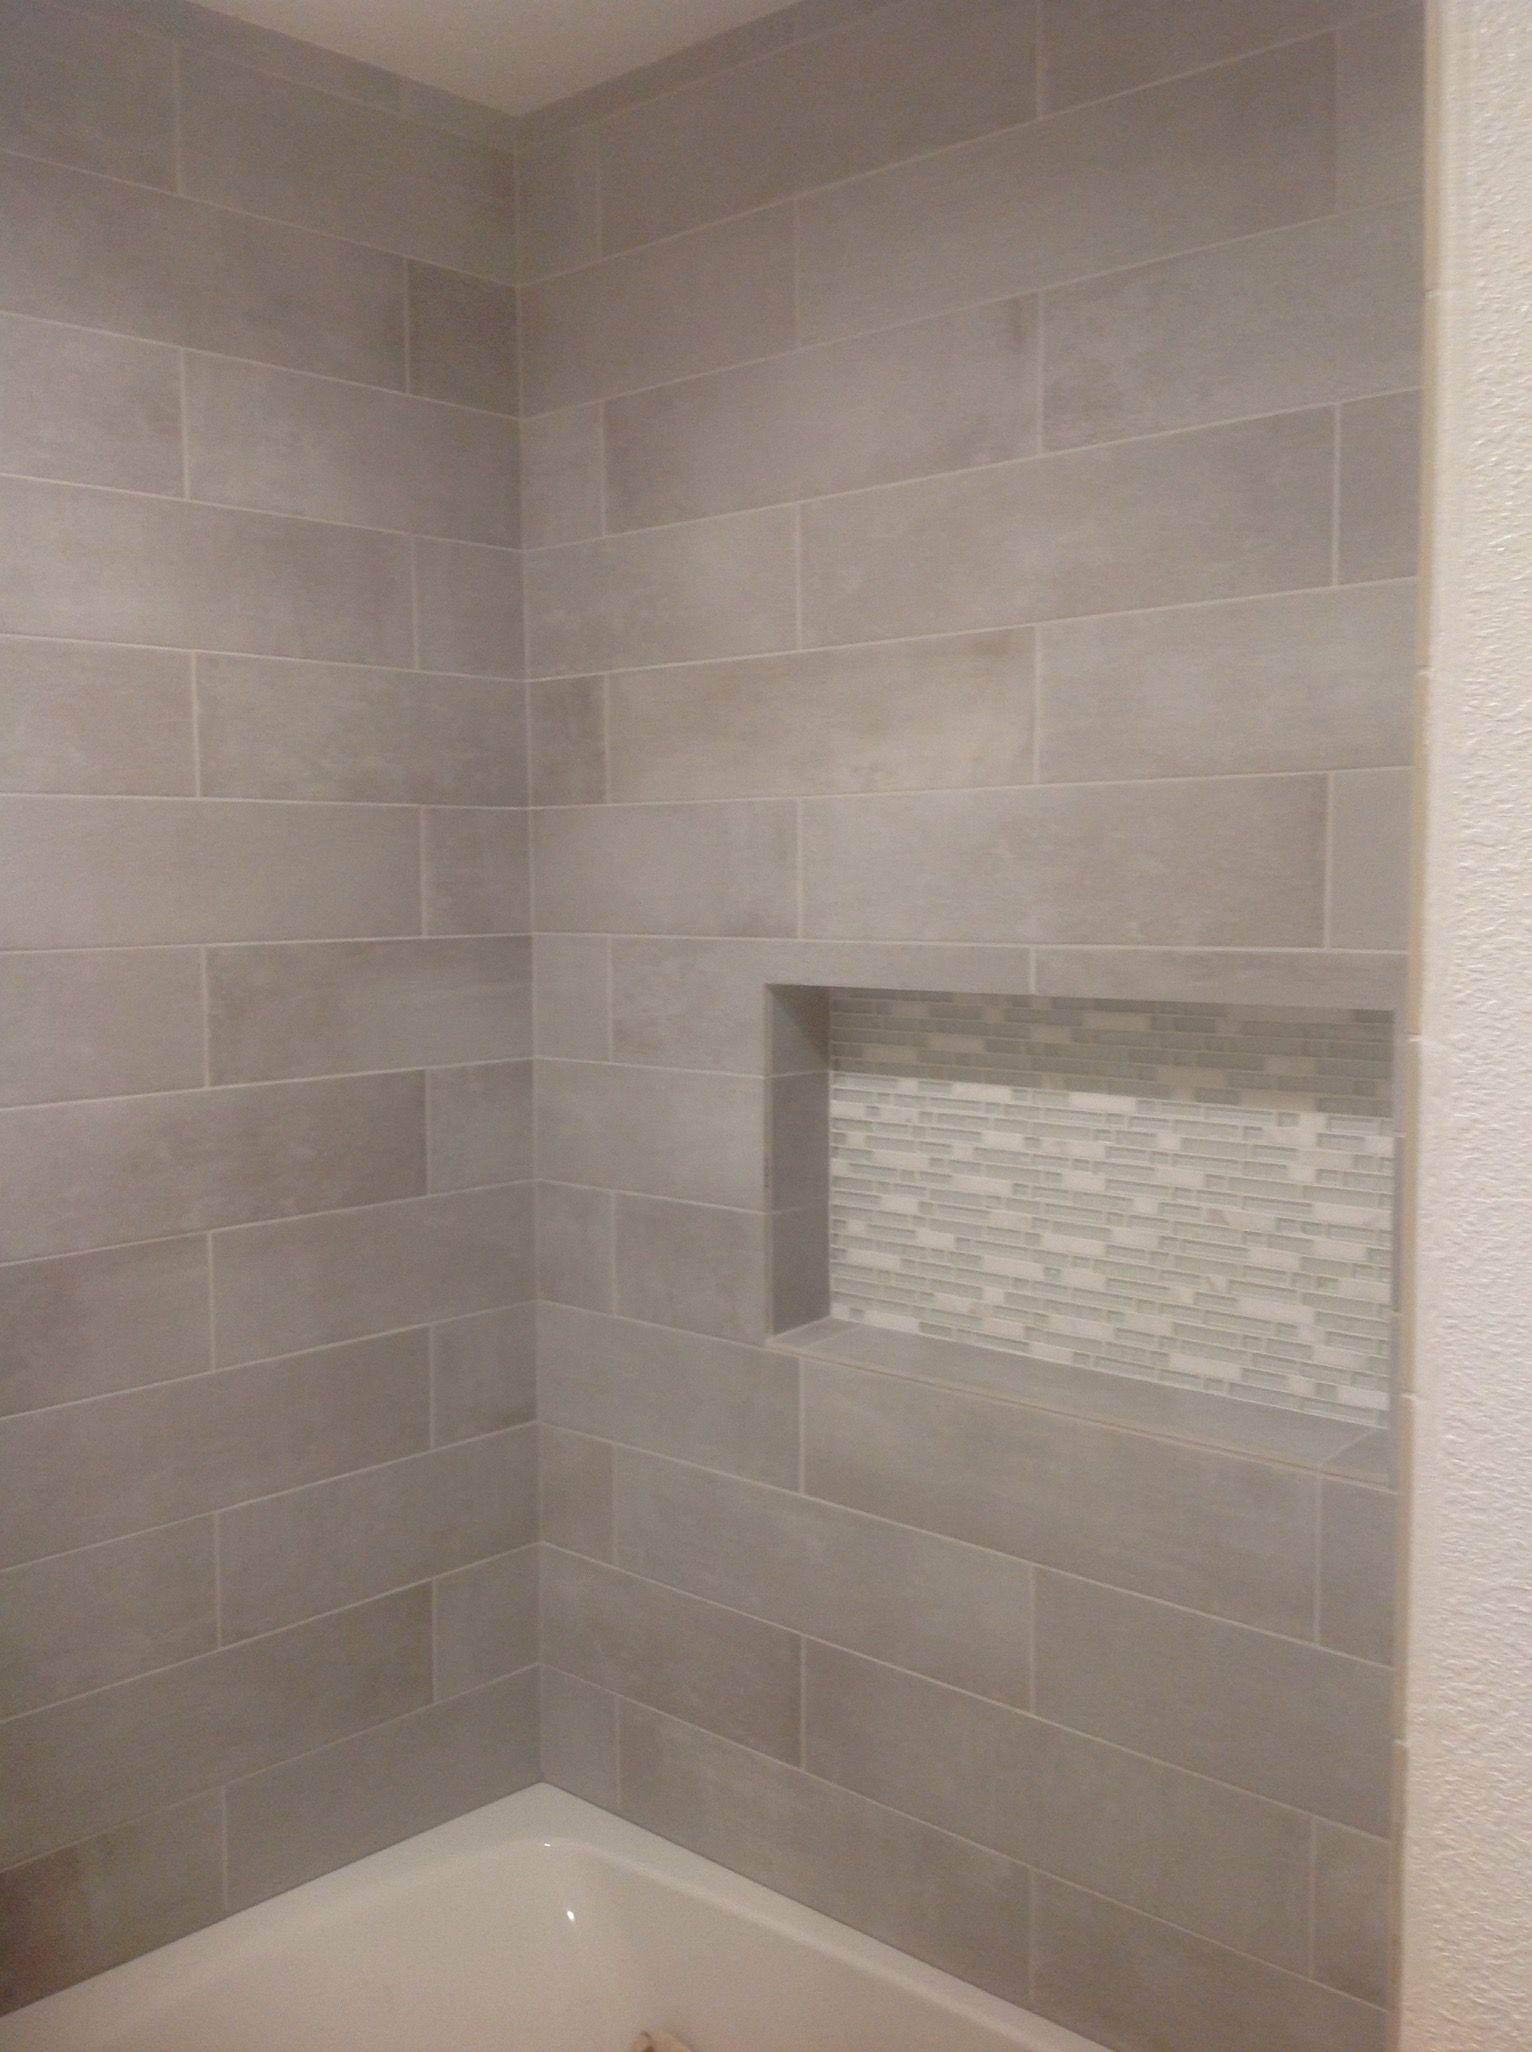 Lowes Bathroom Tiles
 Cityside Gray Porcelain Tile from Lowes